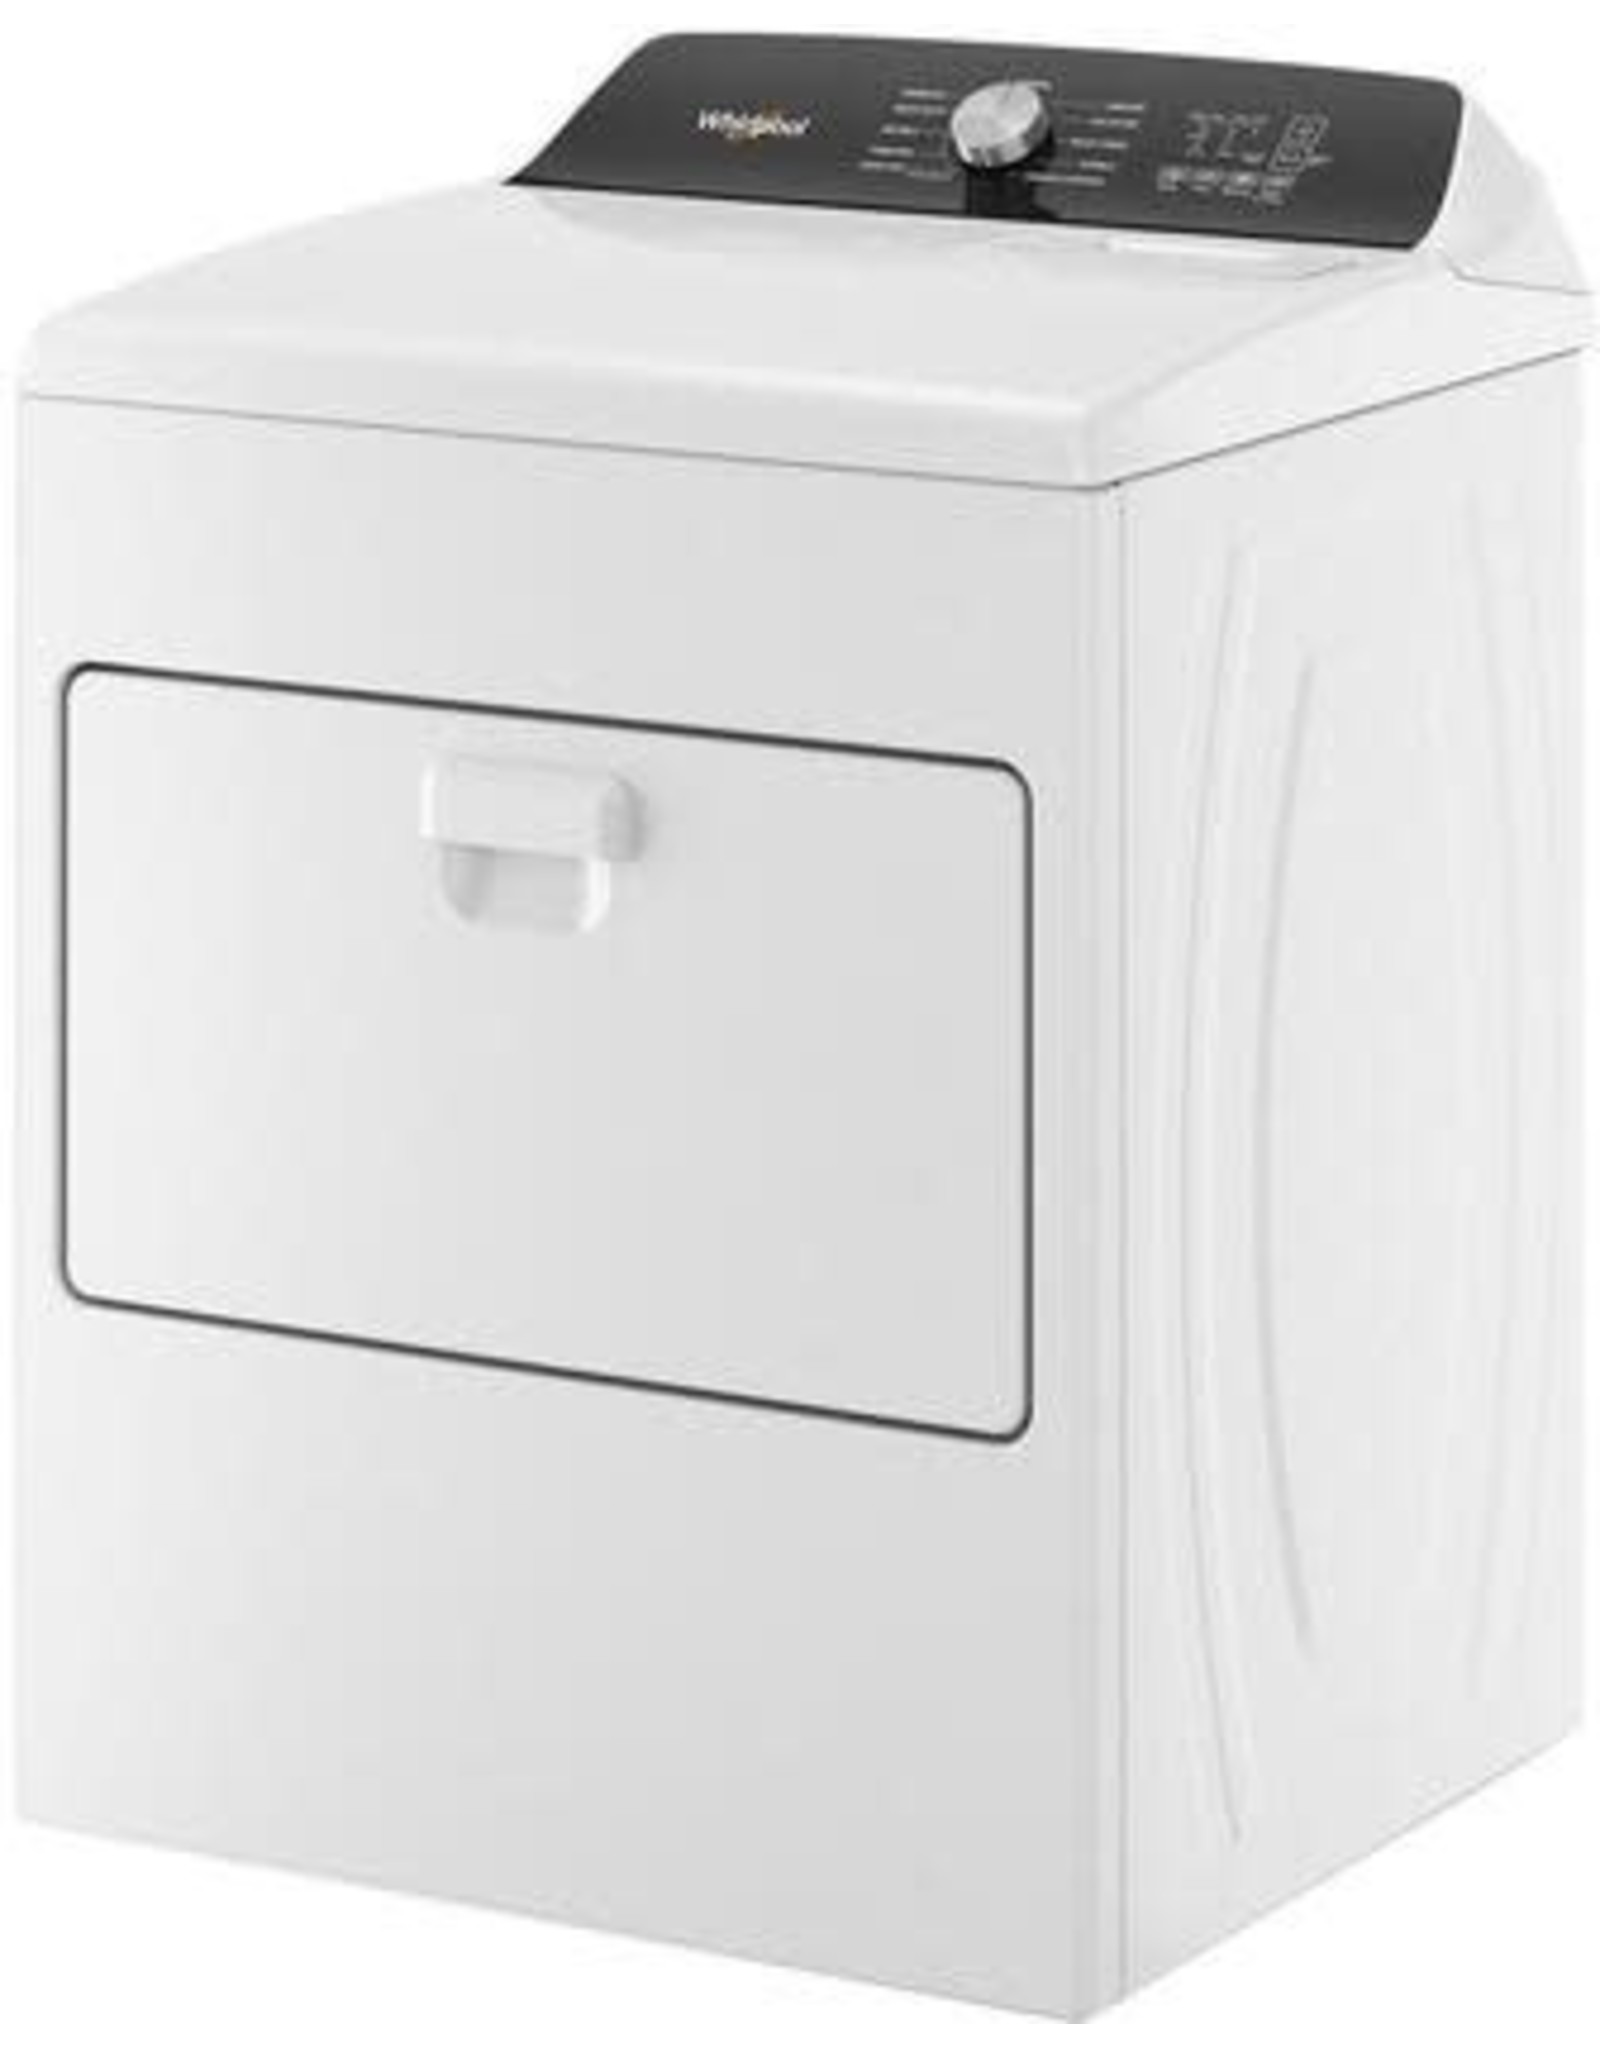 WHIRLPOOL Whirlpool 7-cu ft Electric Dryer (White)